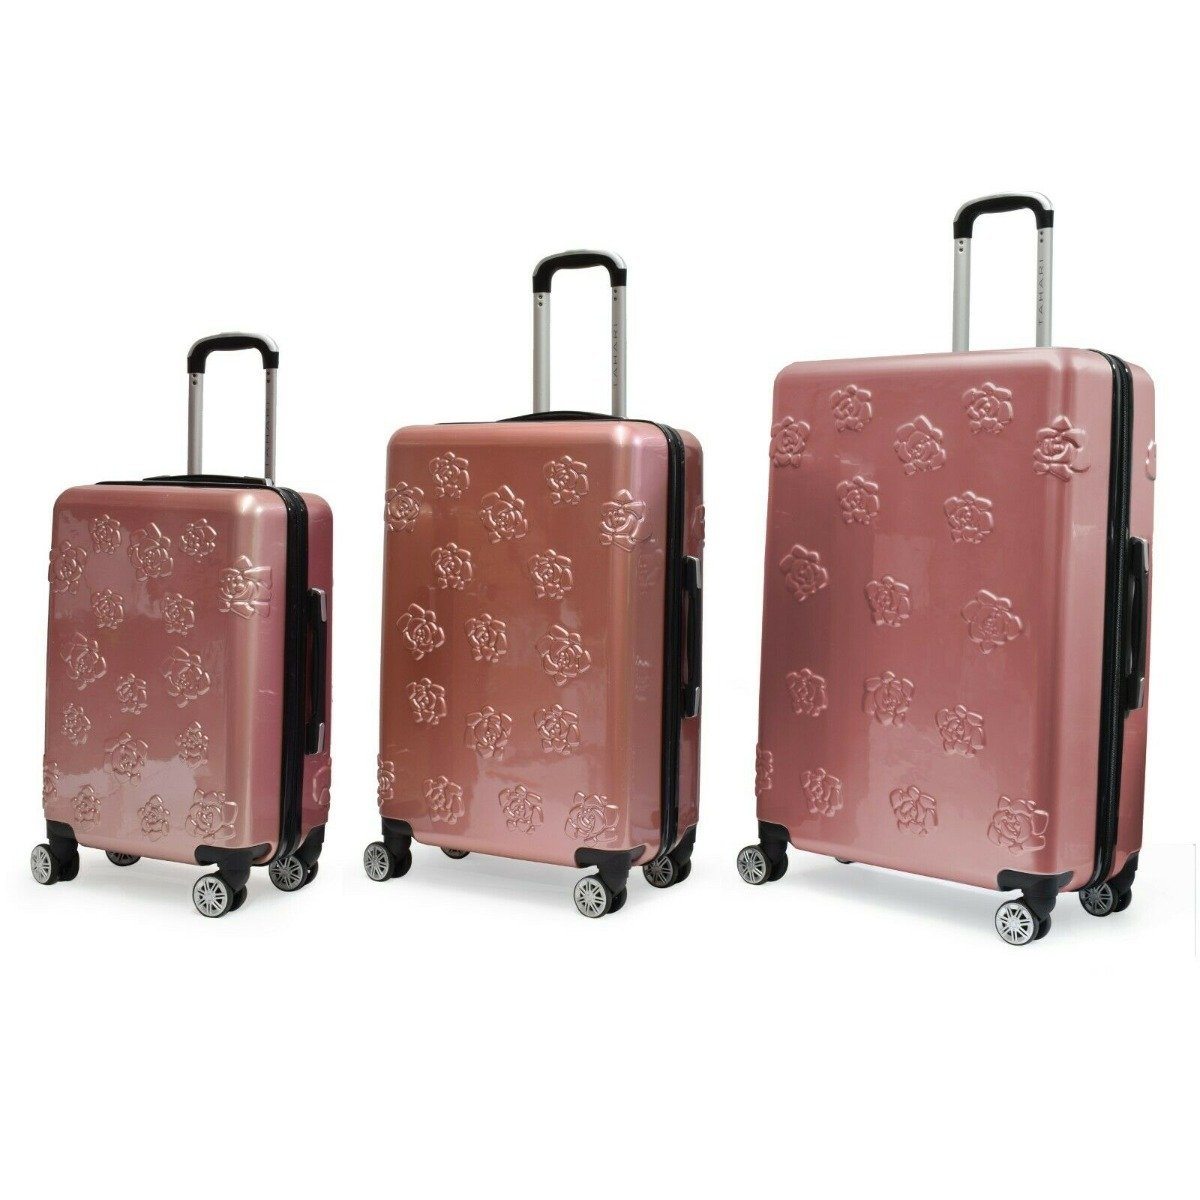 Tahari New York 3D Embossed Rose Lightweight Luggage Set